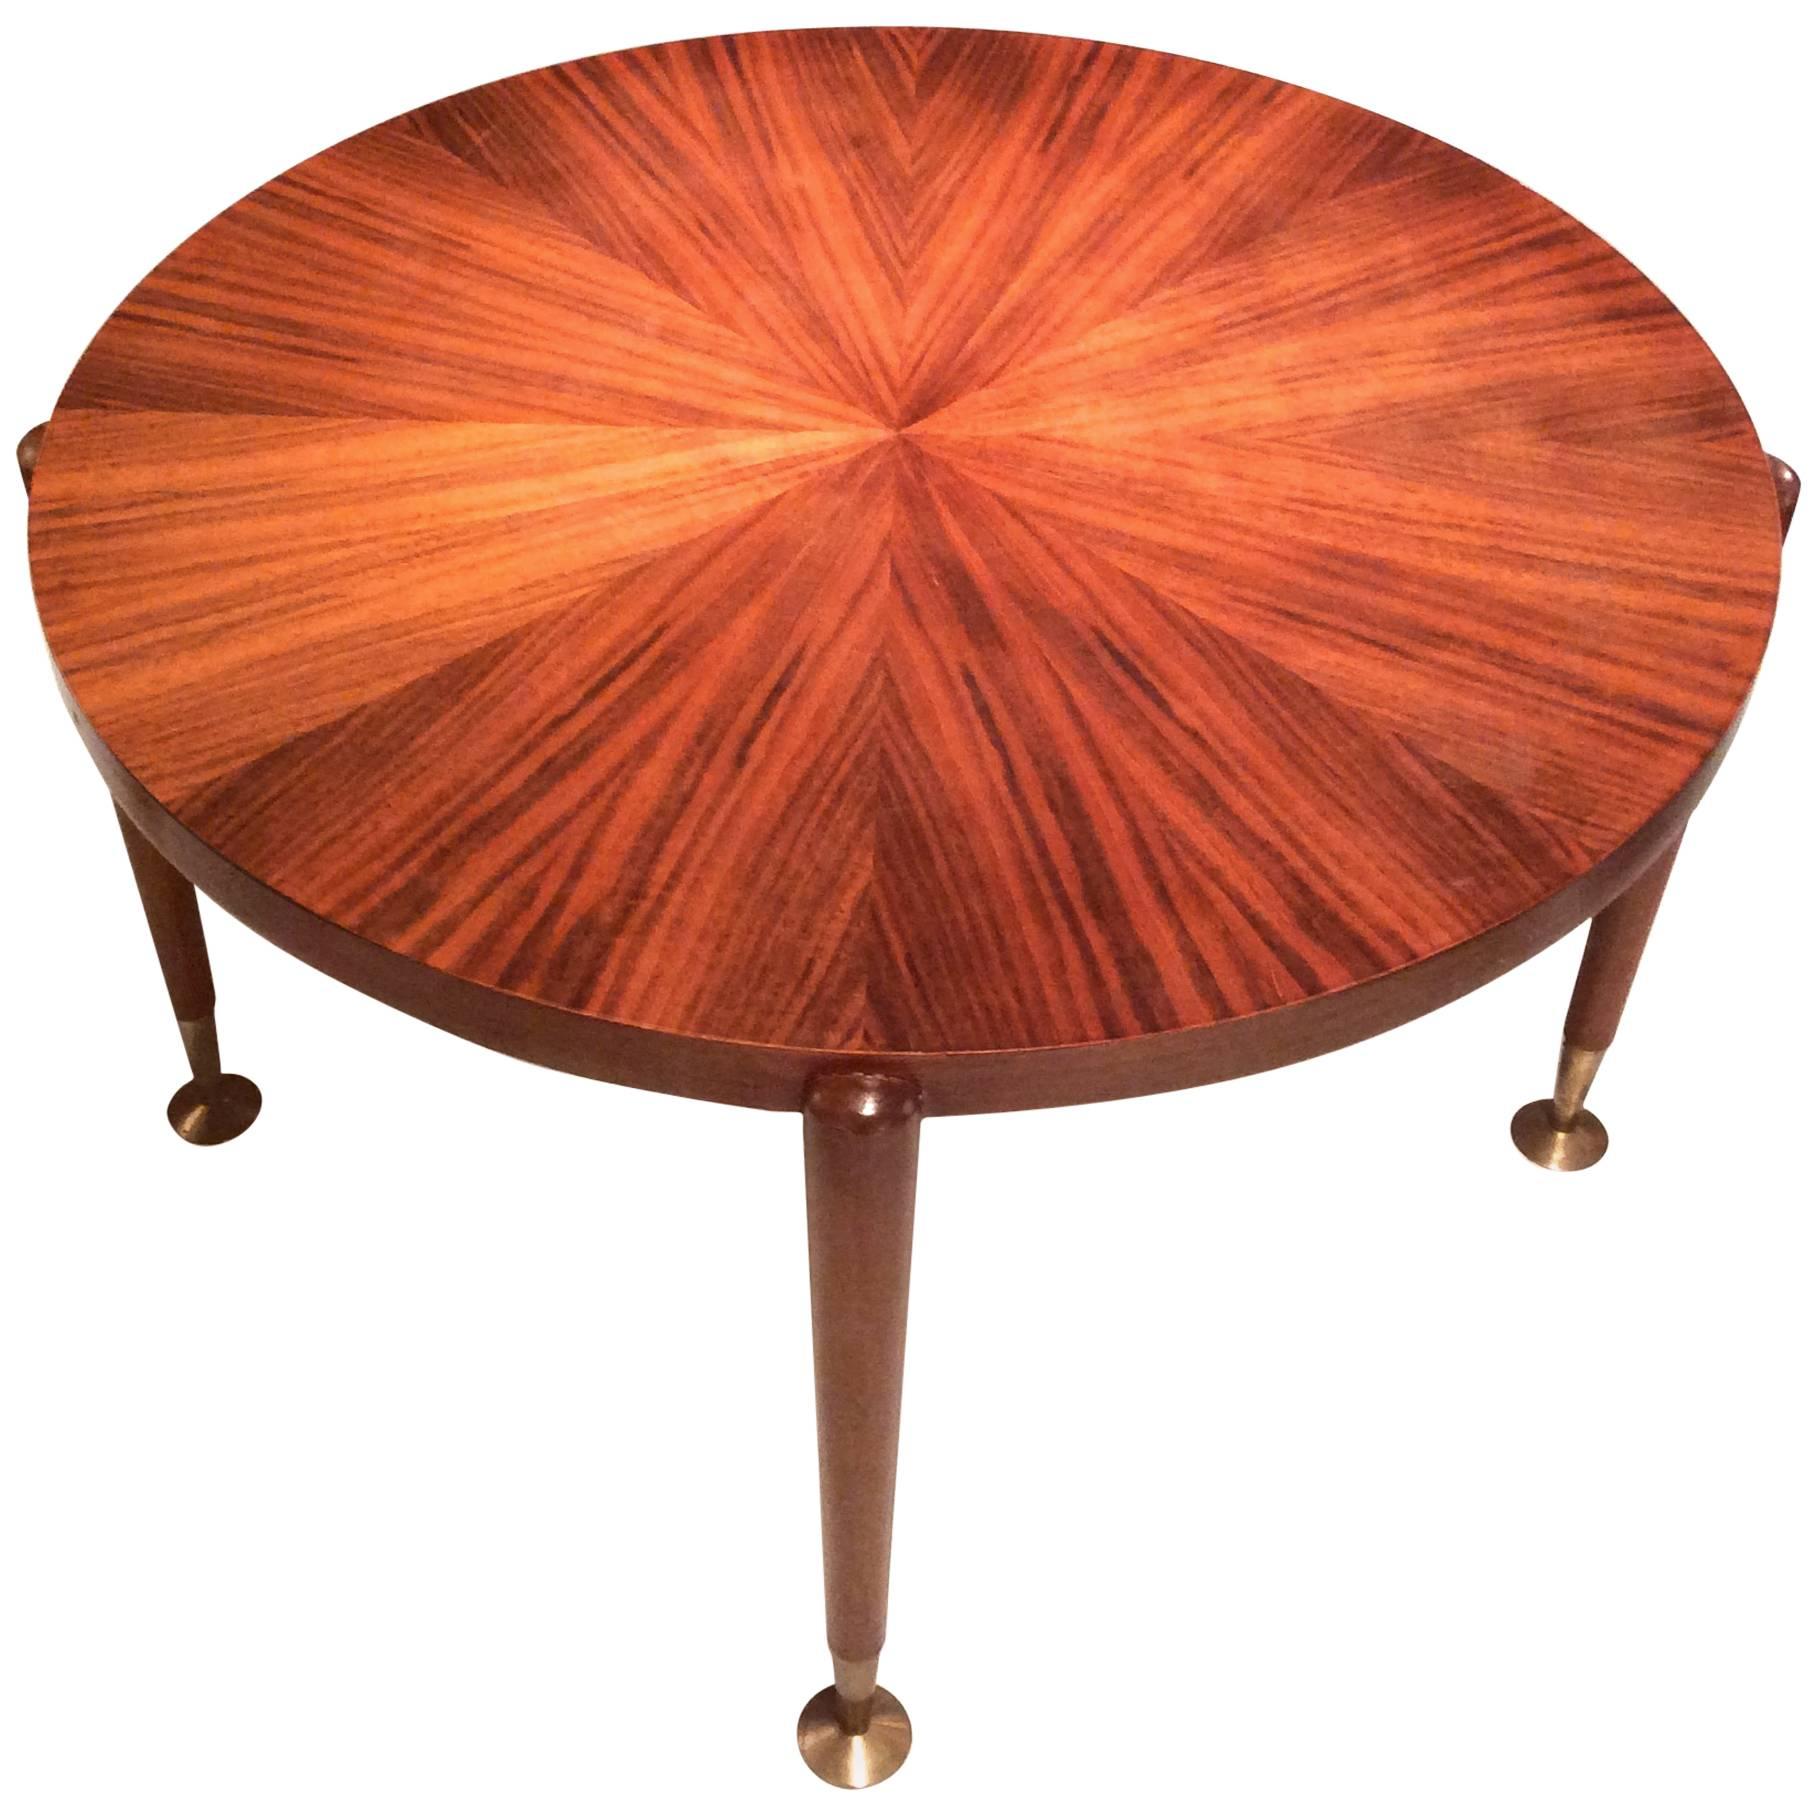 French Art Deco Wood Coffee Table, circa 1940